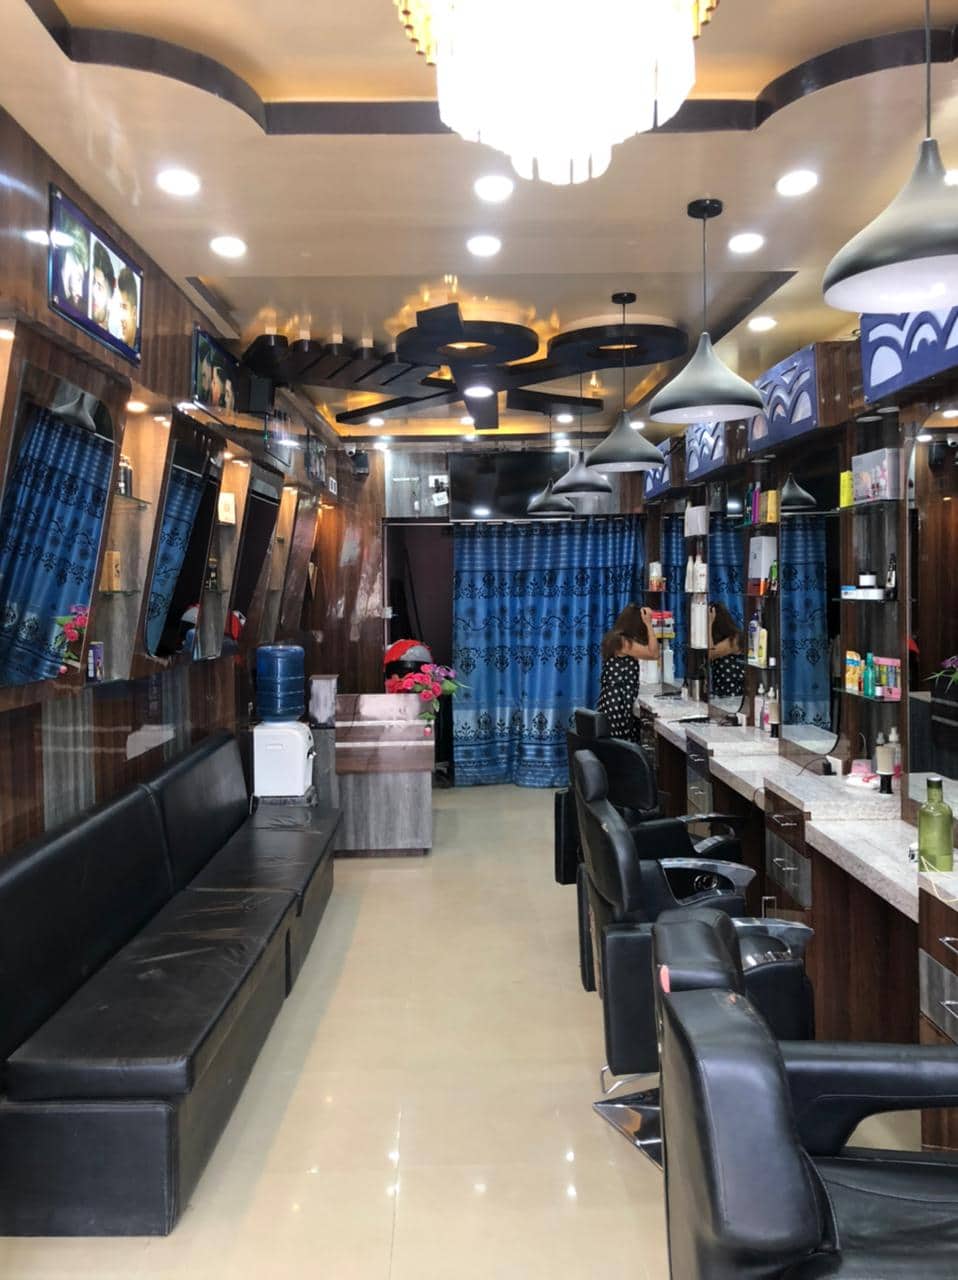 Unisex Saloon on Sale at Butwal Tinkune